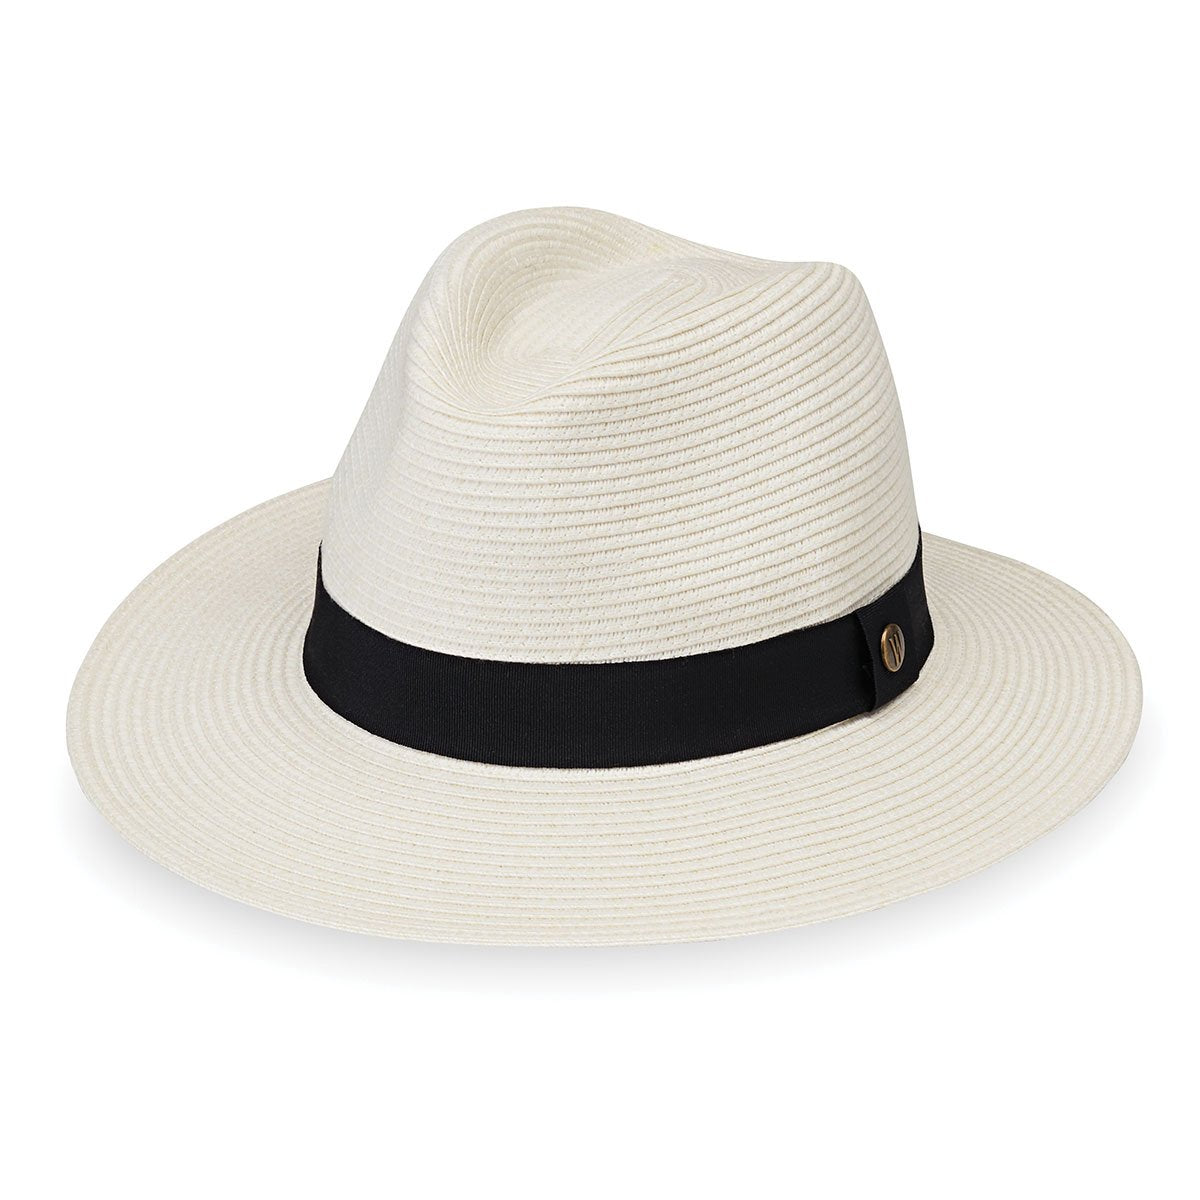 Wallaroo Hat Co. Men's Palm Beach Hat L/XL